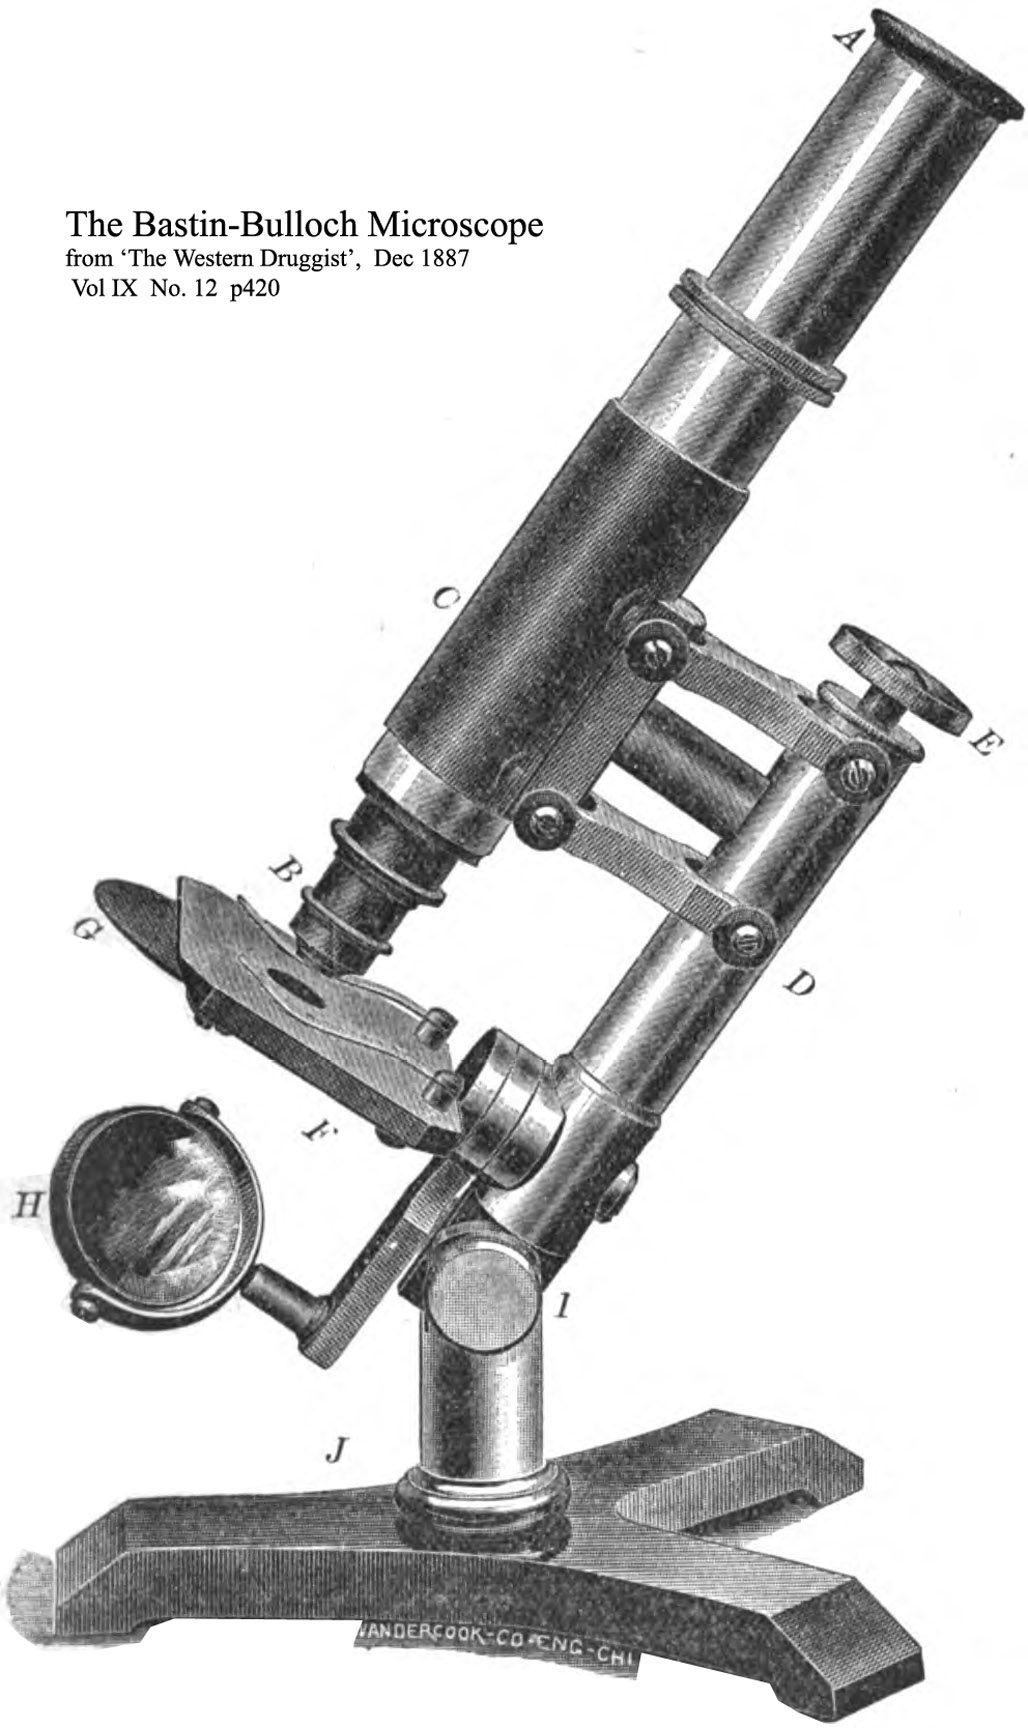 Bastin-Bulloch Microscope